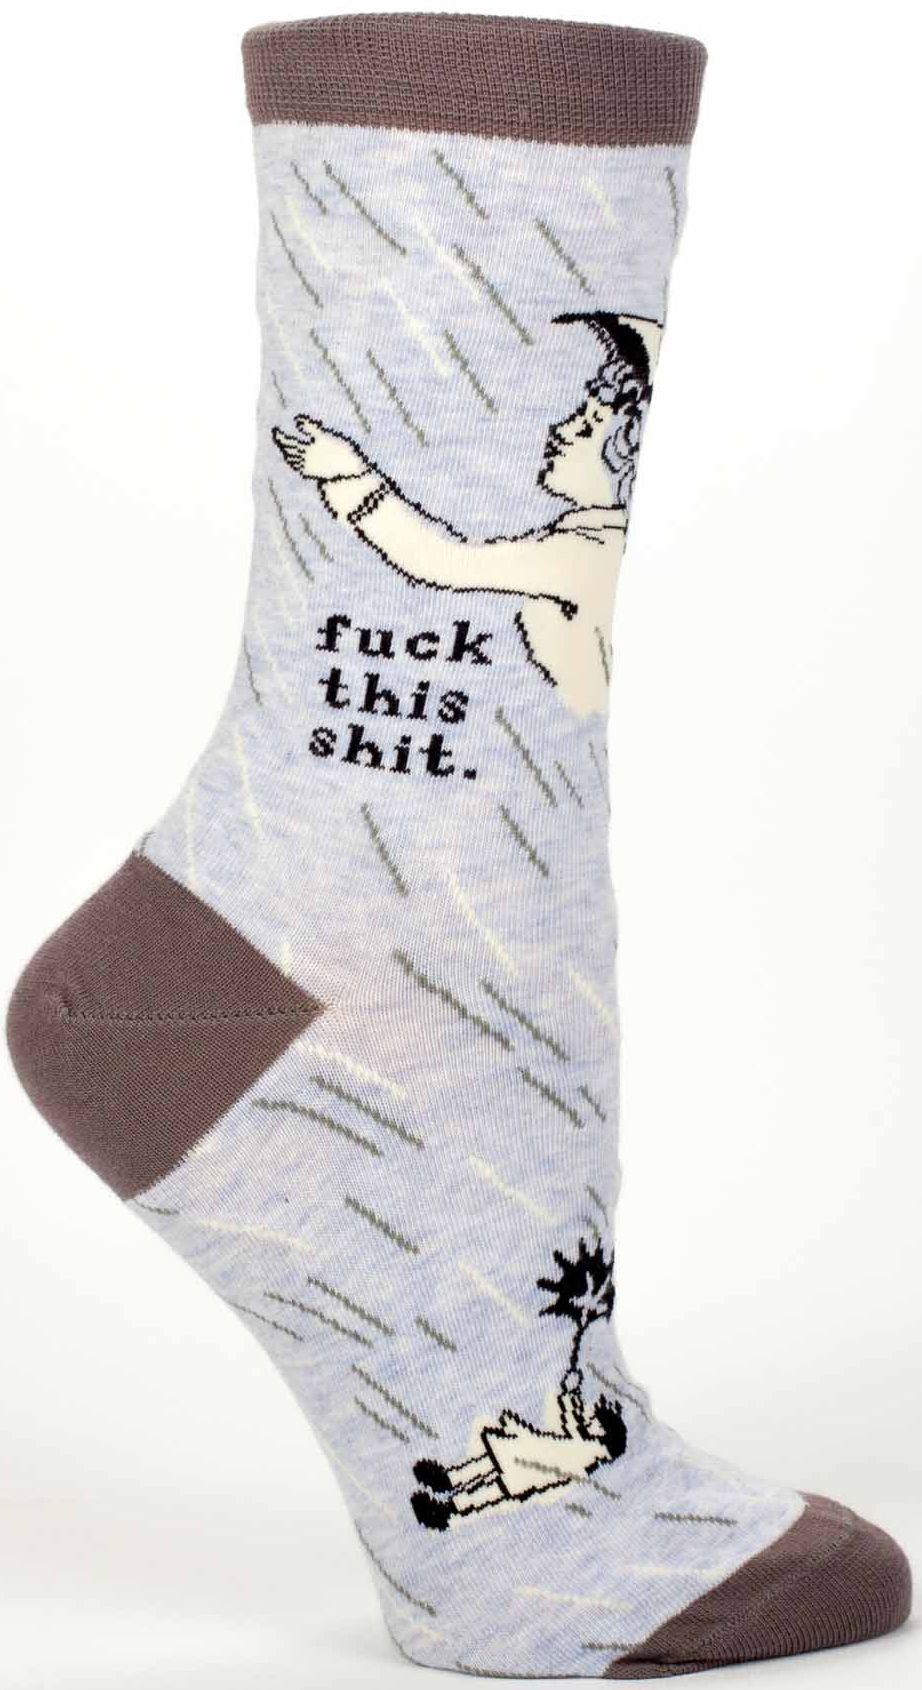 Fuck This Shit Women's Socks